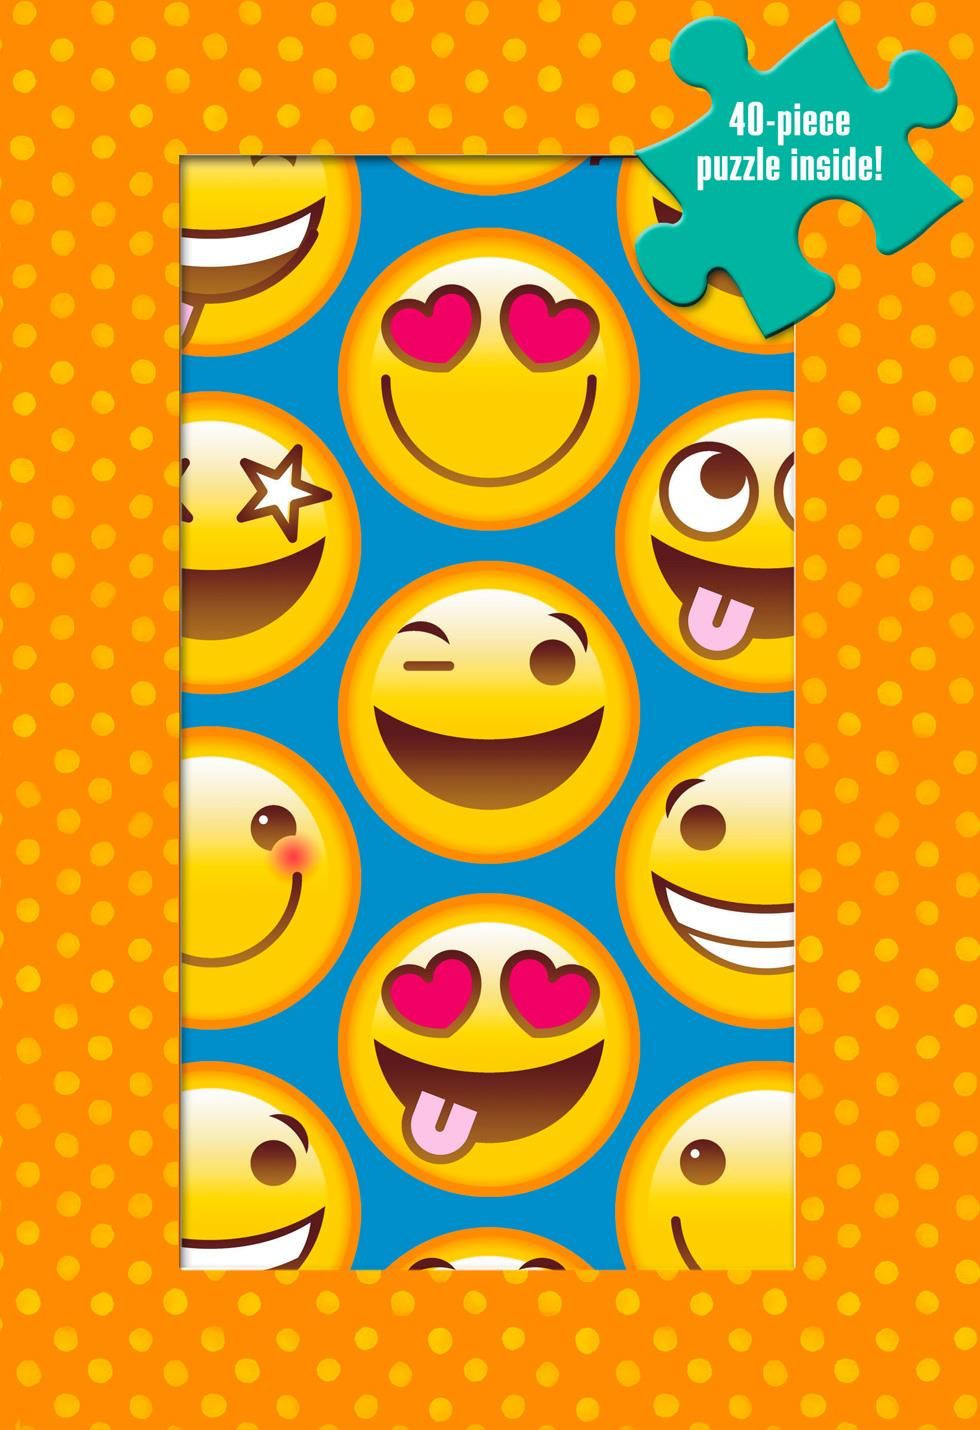 Best ideas about Emoji Birthday Card
. Save or Pin Emoji Puzzle Birthday Card Greeting Cards Hallmark Now.